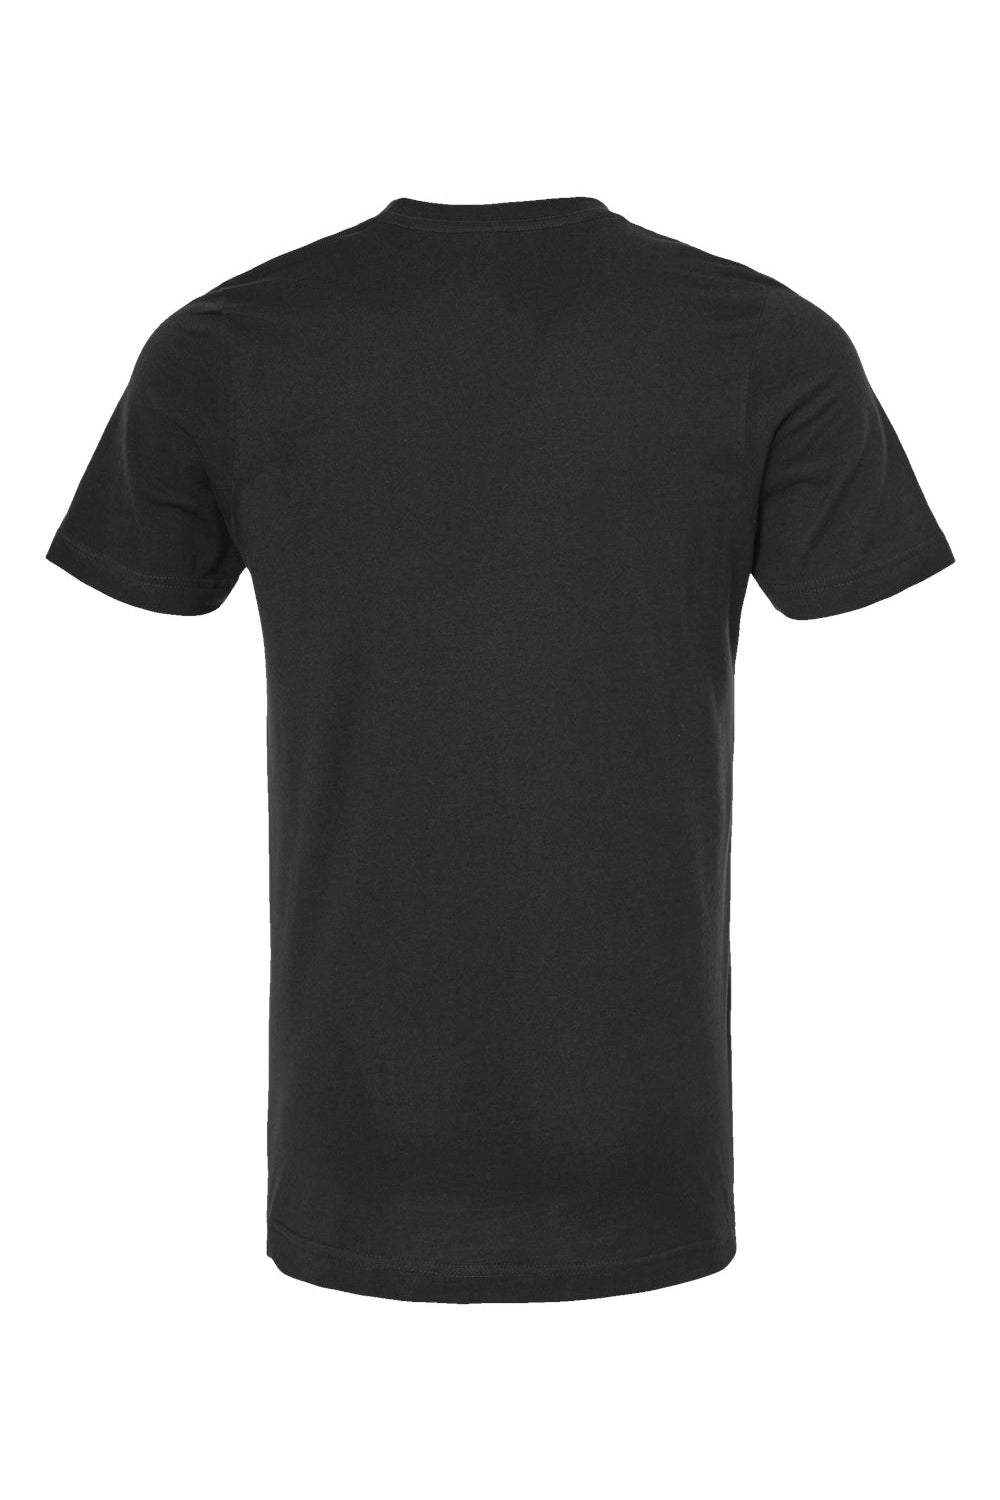 Tultex 502 Mens Premium Short Sleeve Crewneck T-Shirt Black Flat Back